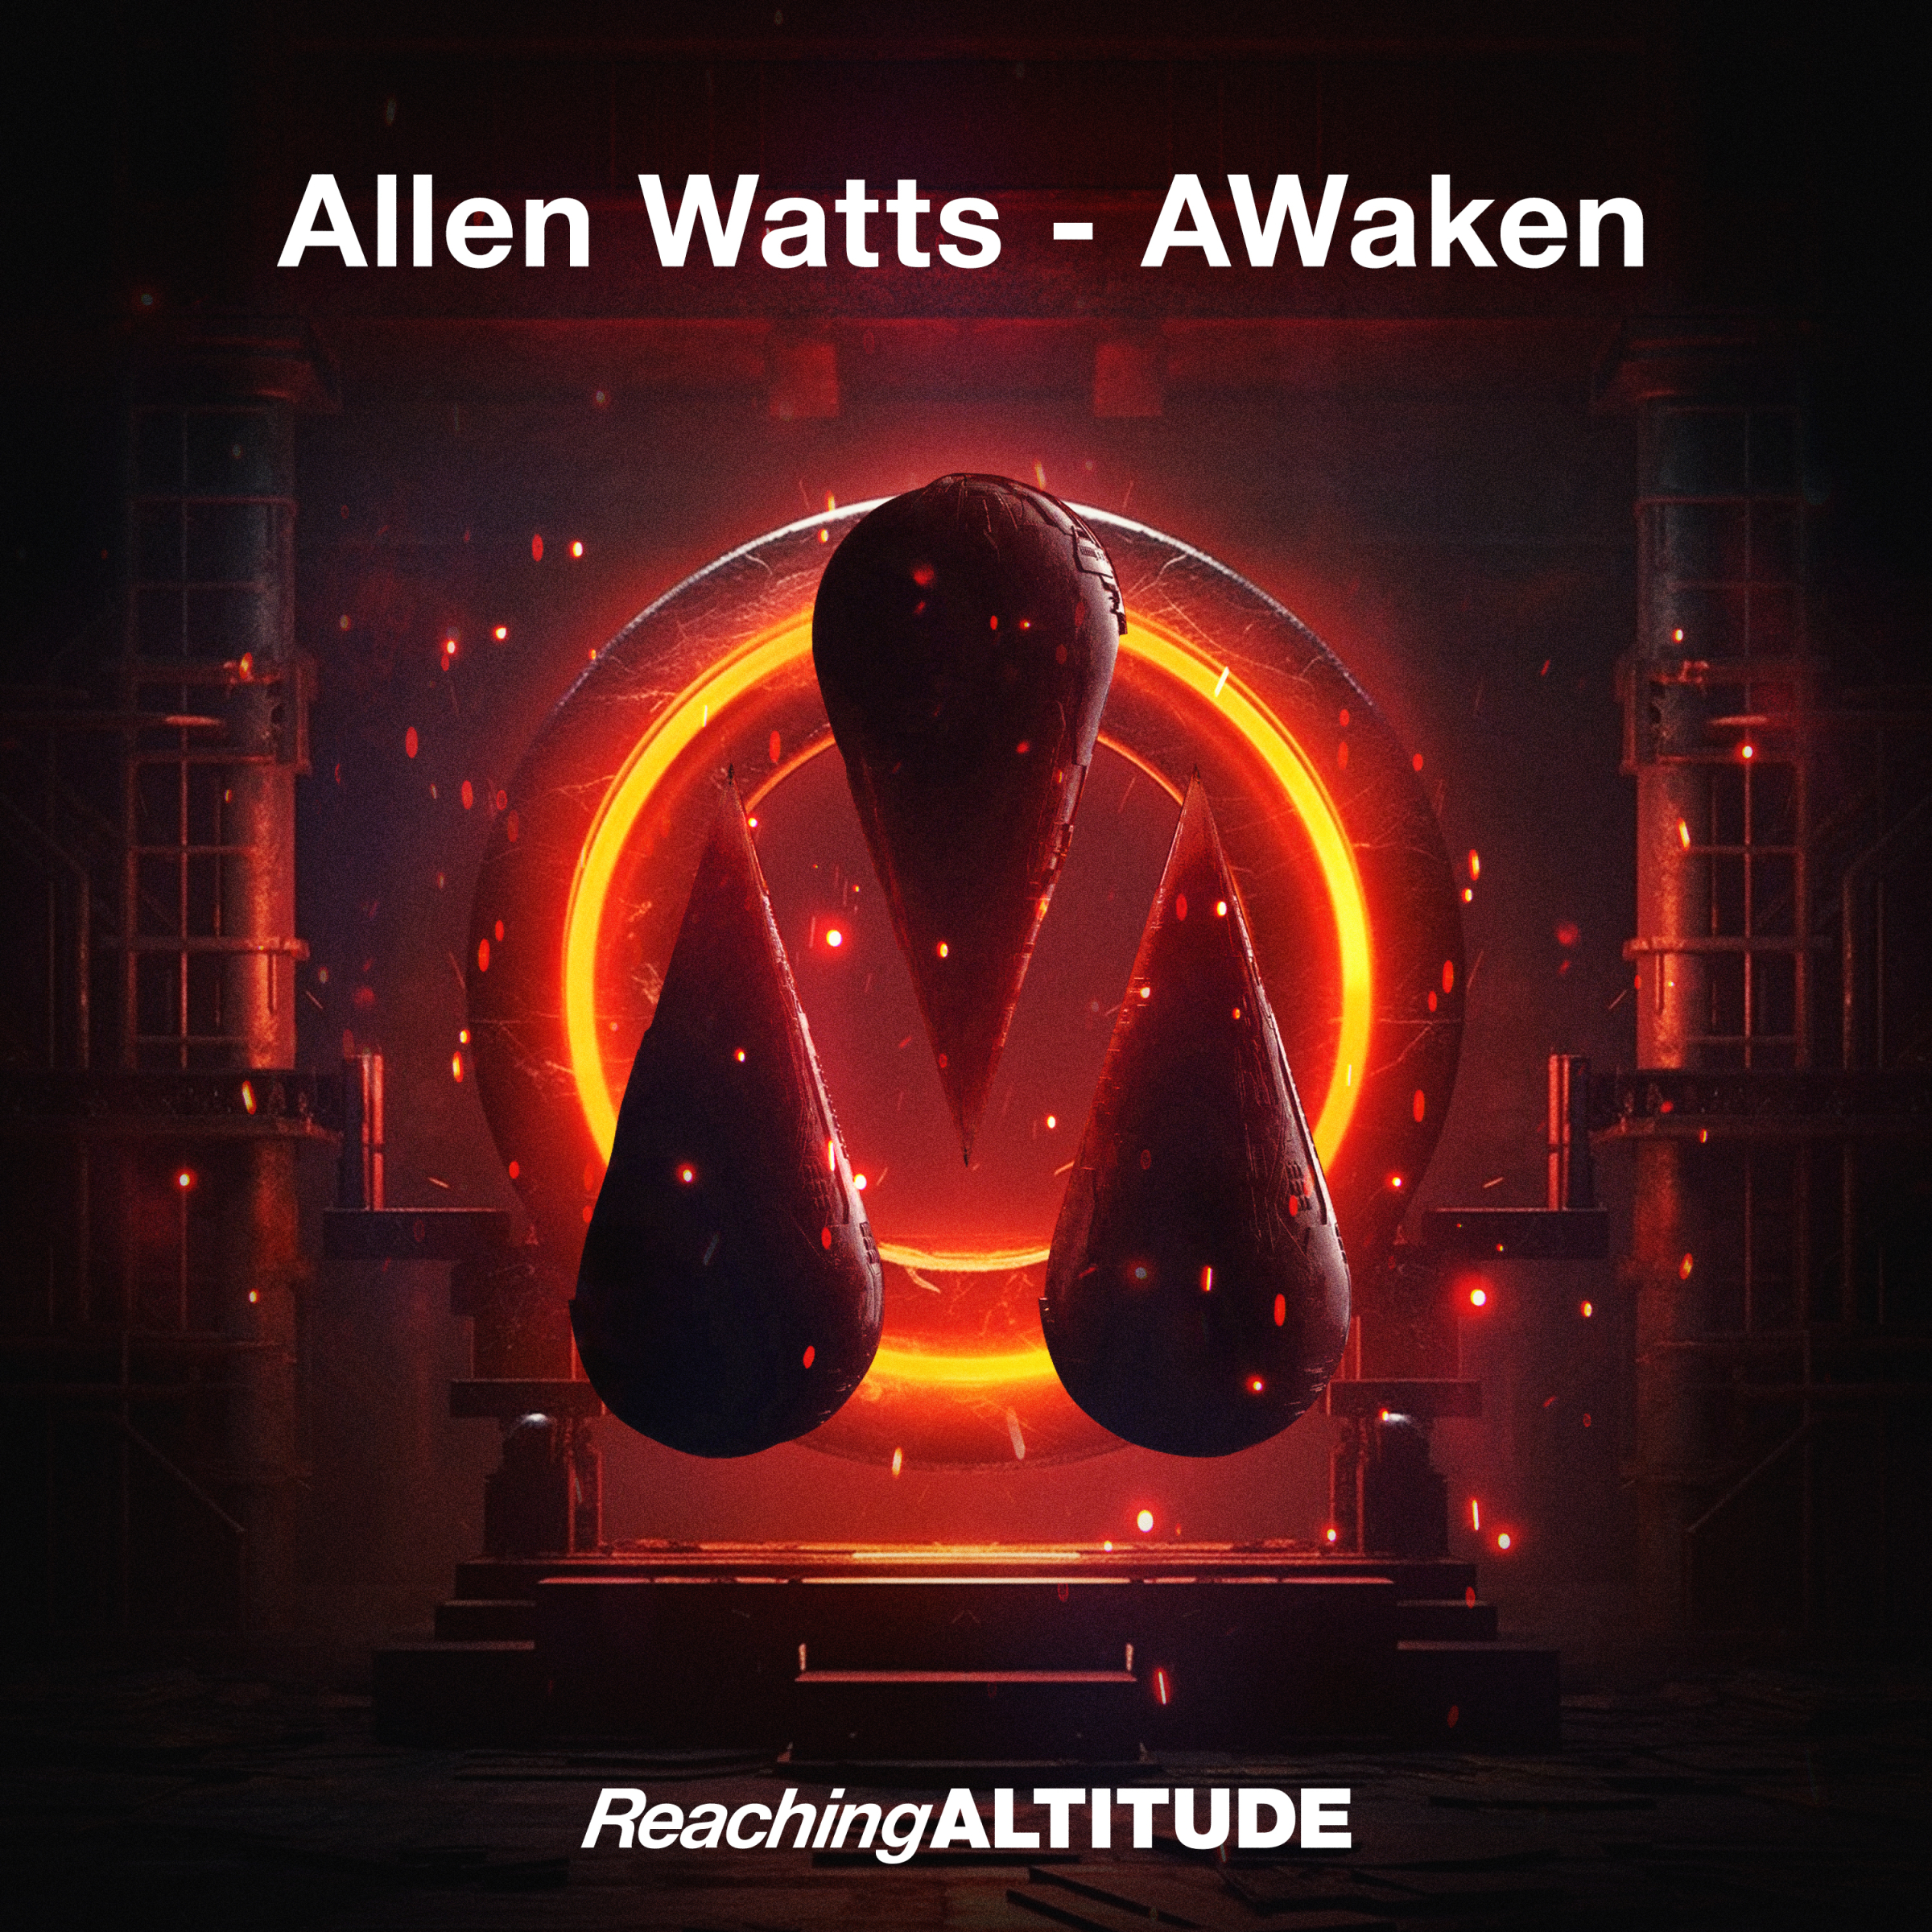 Emedi - Awake (Extended Mix). Alan Awake 2 coffe. Allen watts